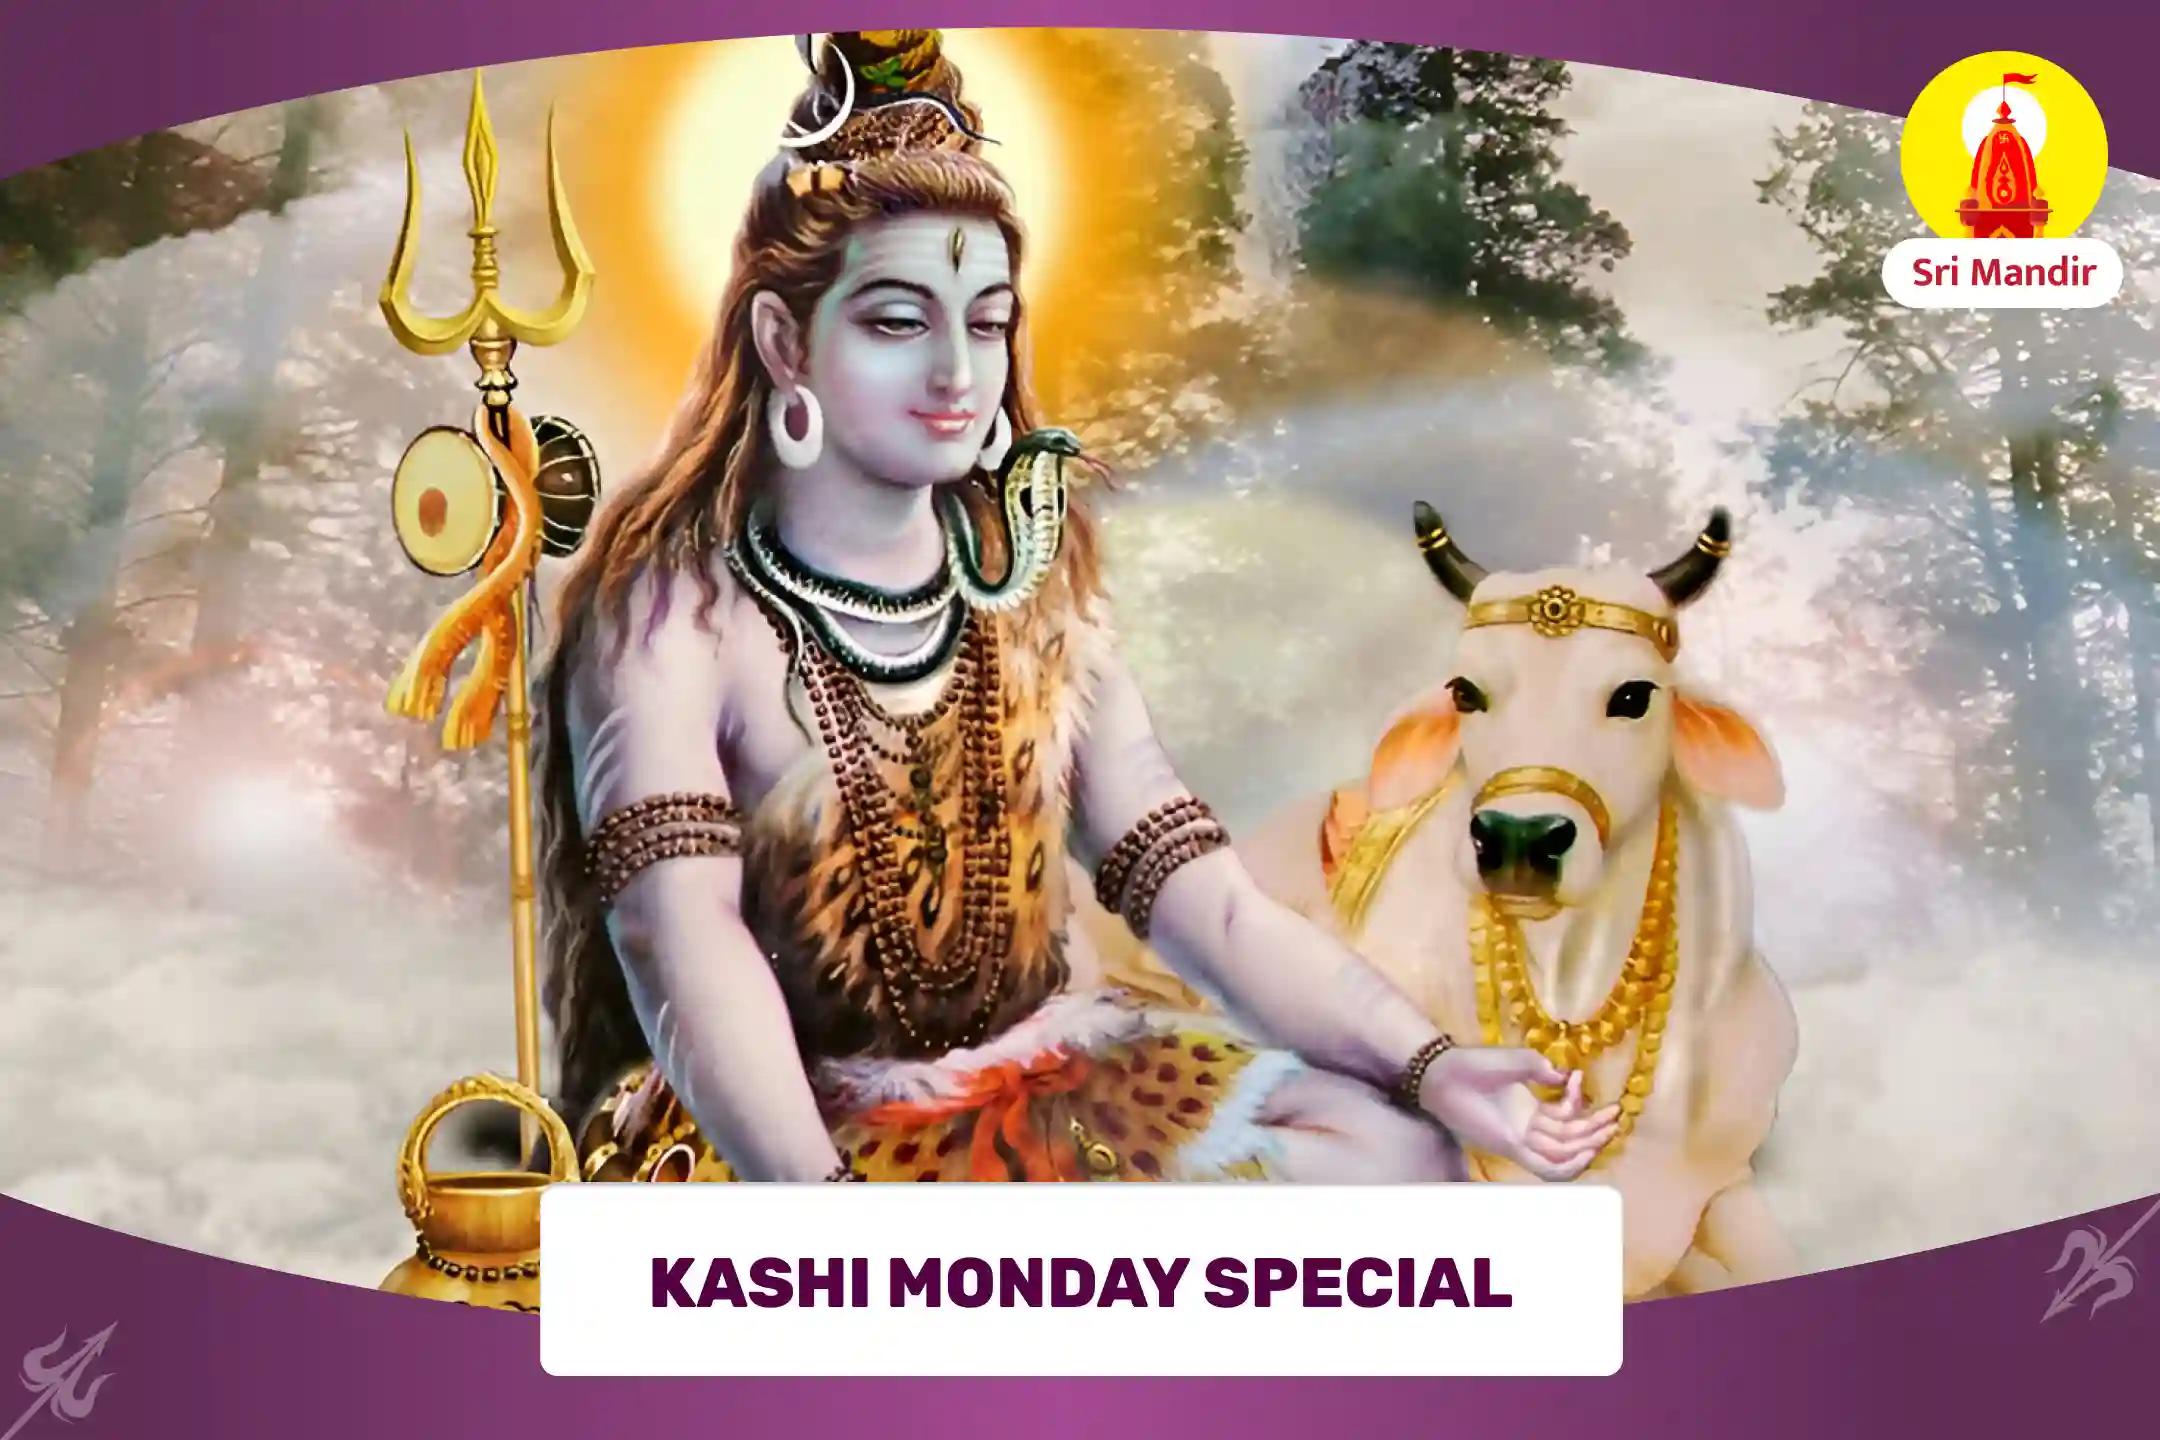 Kashi Monday Special Mahamrityunjay Yagya and Shiva Rudrabhishek for Good Health and Protection from Life-Threatening Diseases